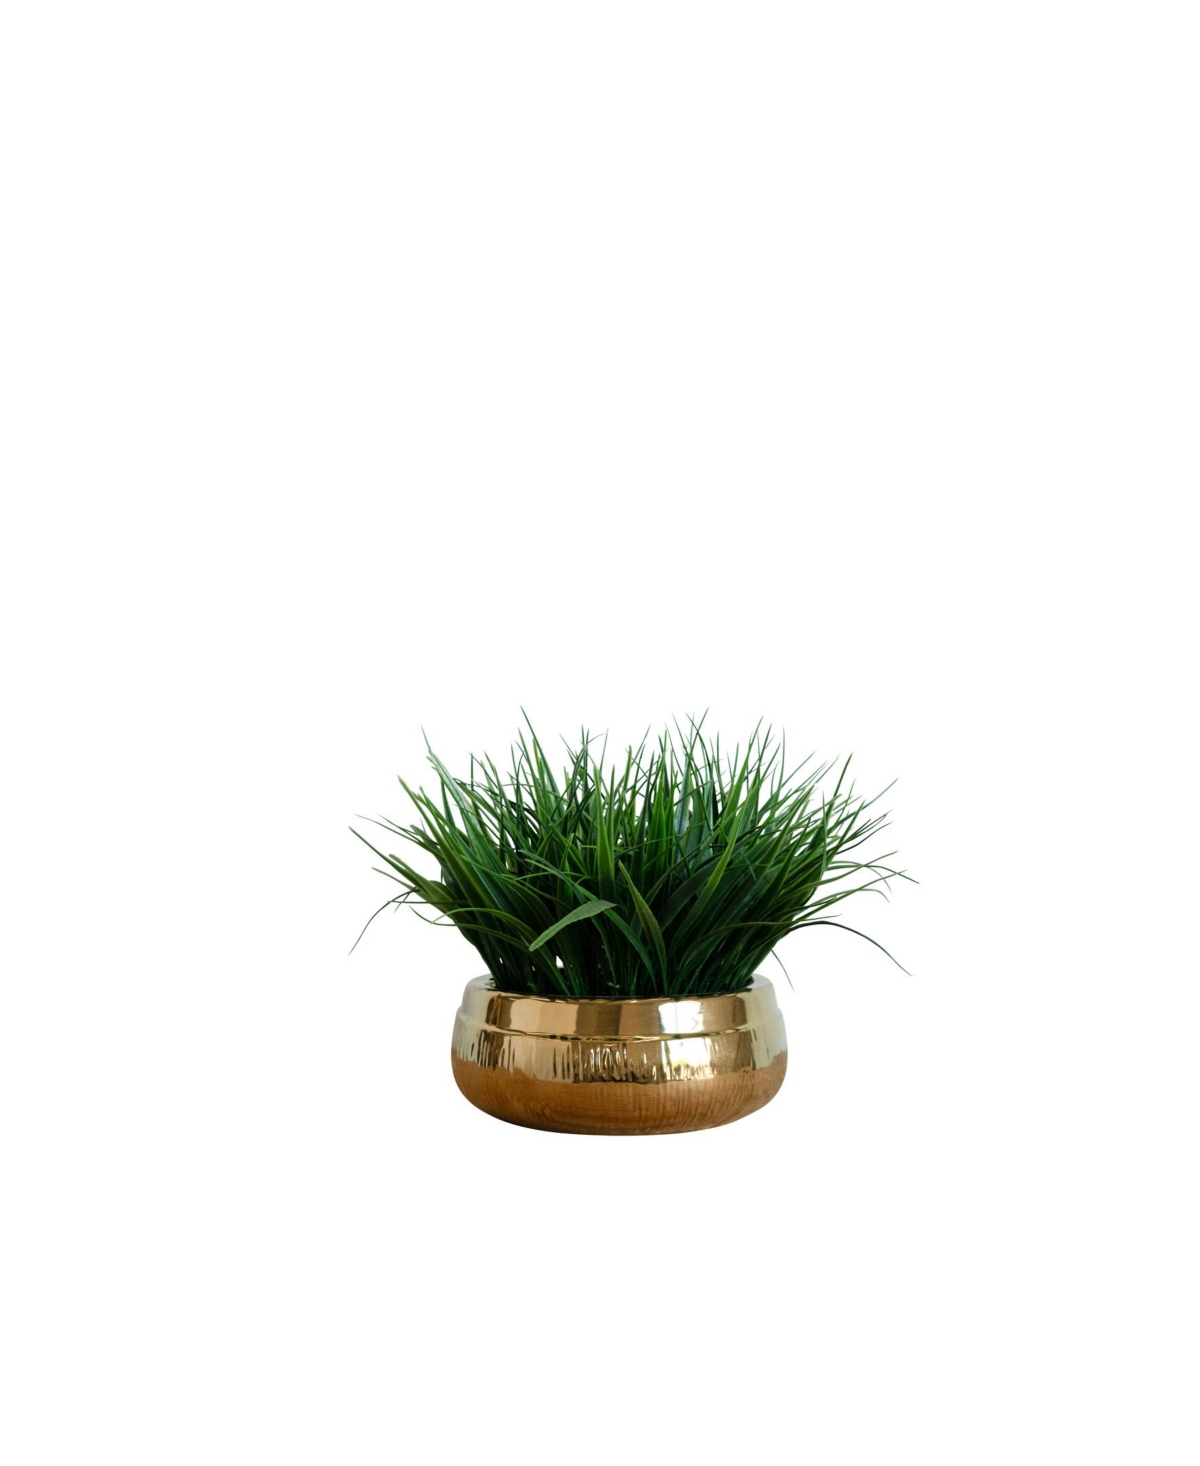 Desktop Artificial Grass Bowl in Decorative Pot, 9" - Gold-Tone